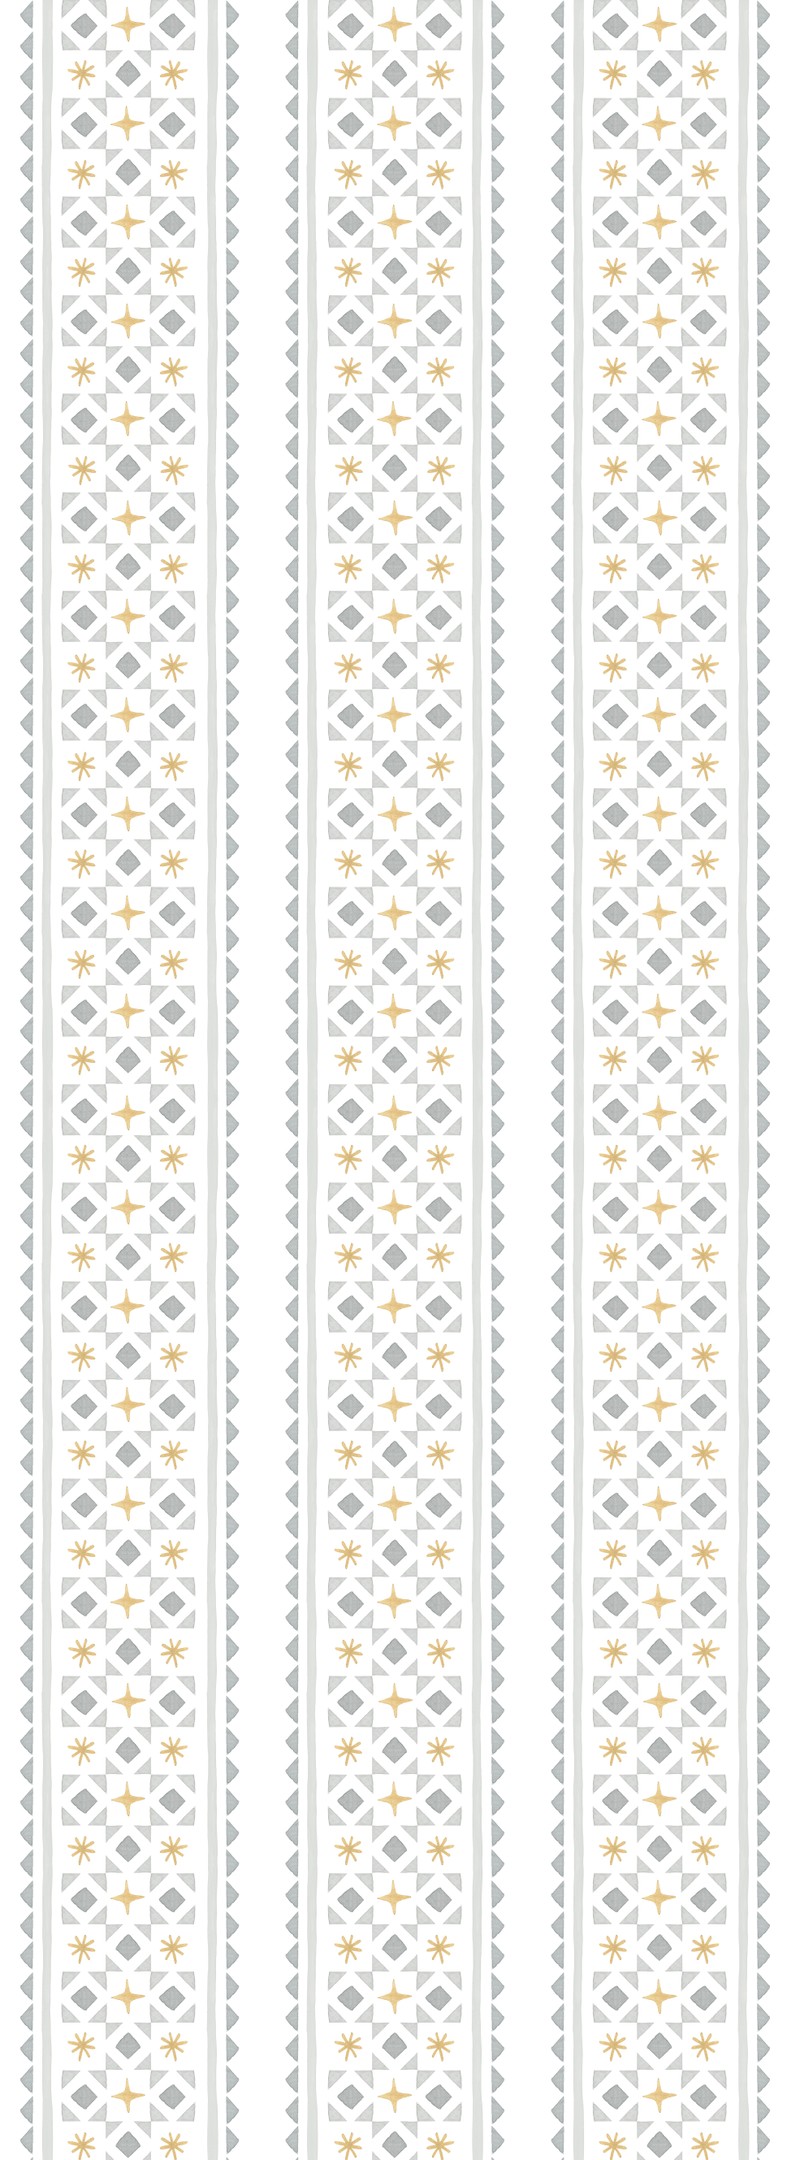 Papel de parede gravataria e asteriscos (cinza e amarelo) T.Design - 100% celulose